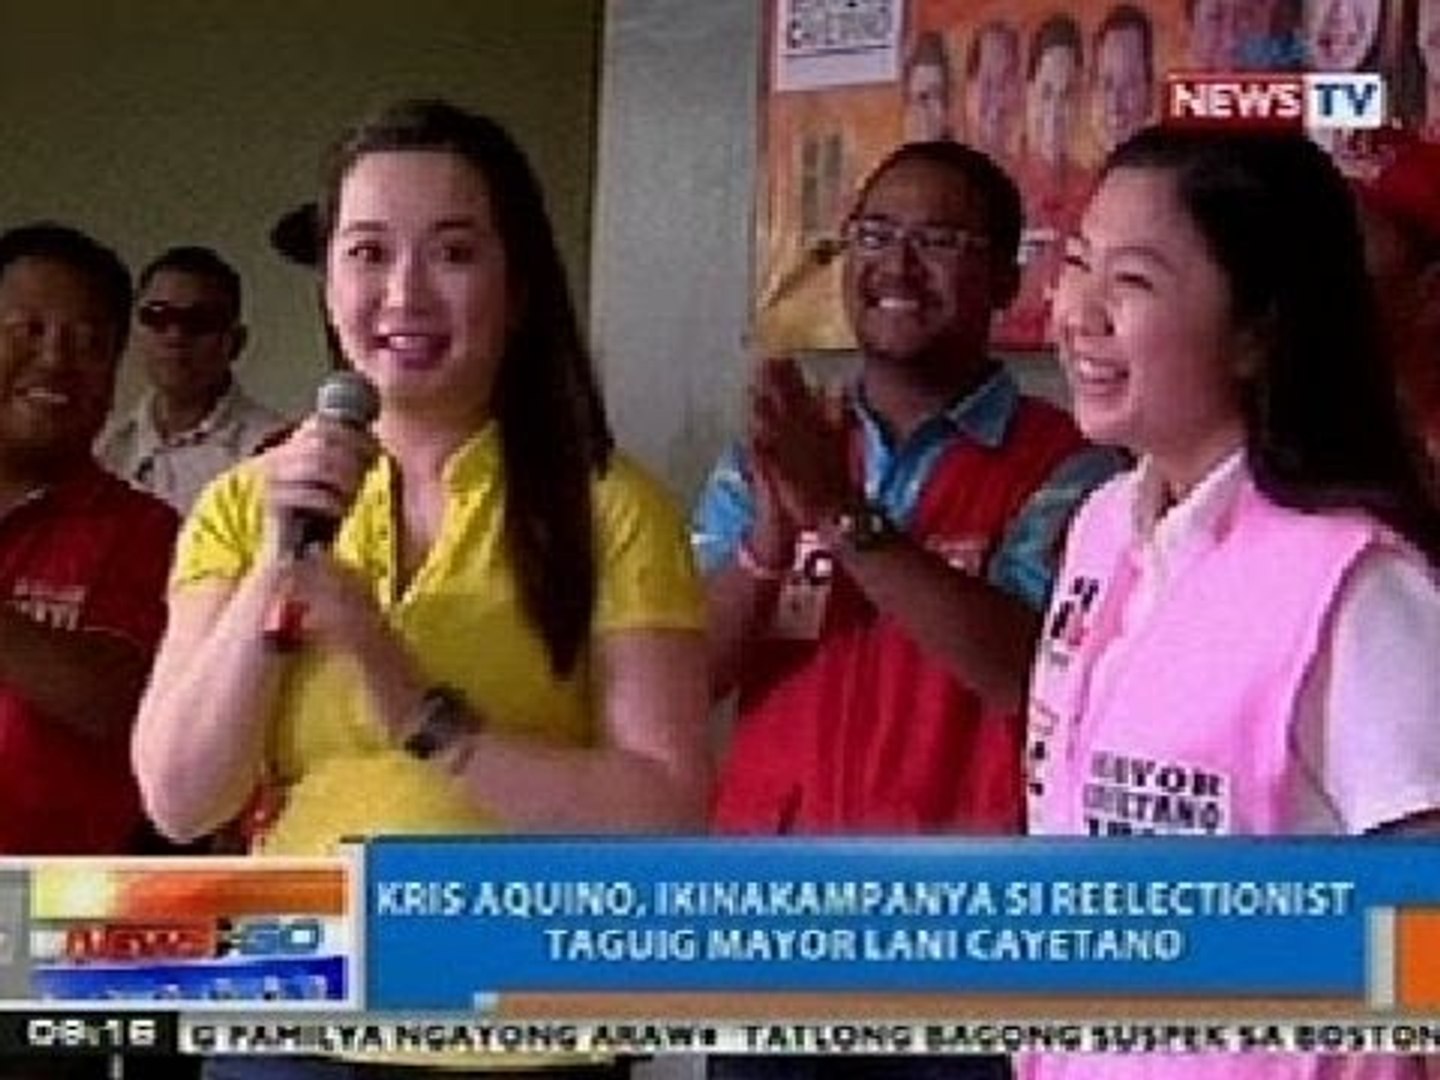 NTG: Kris Aquino, ikinakampanya si Reelectionist Taguig Mayor Lani Cayetano